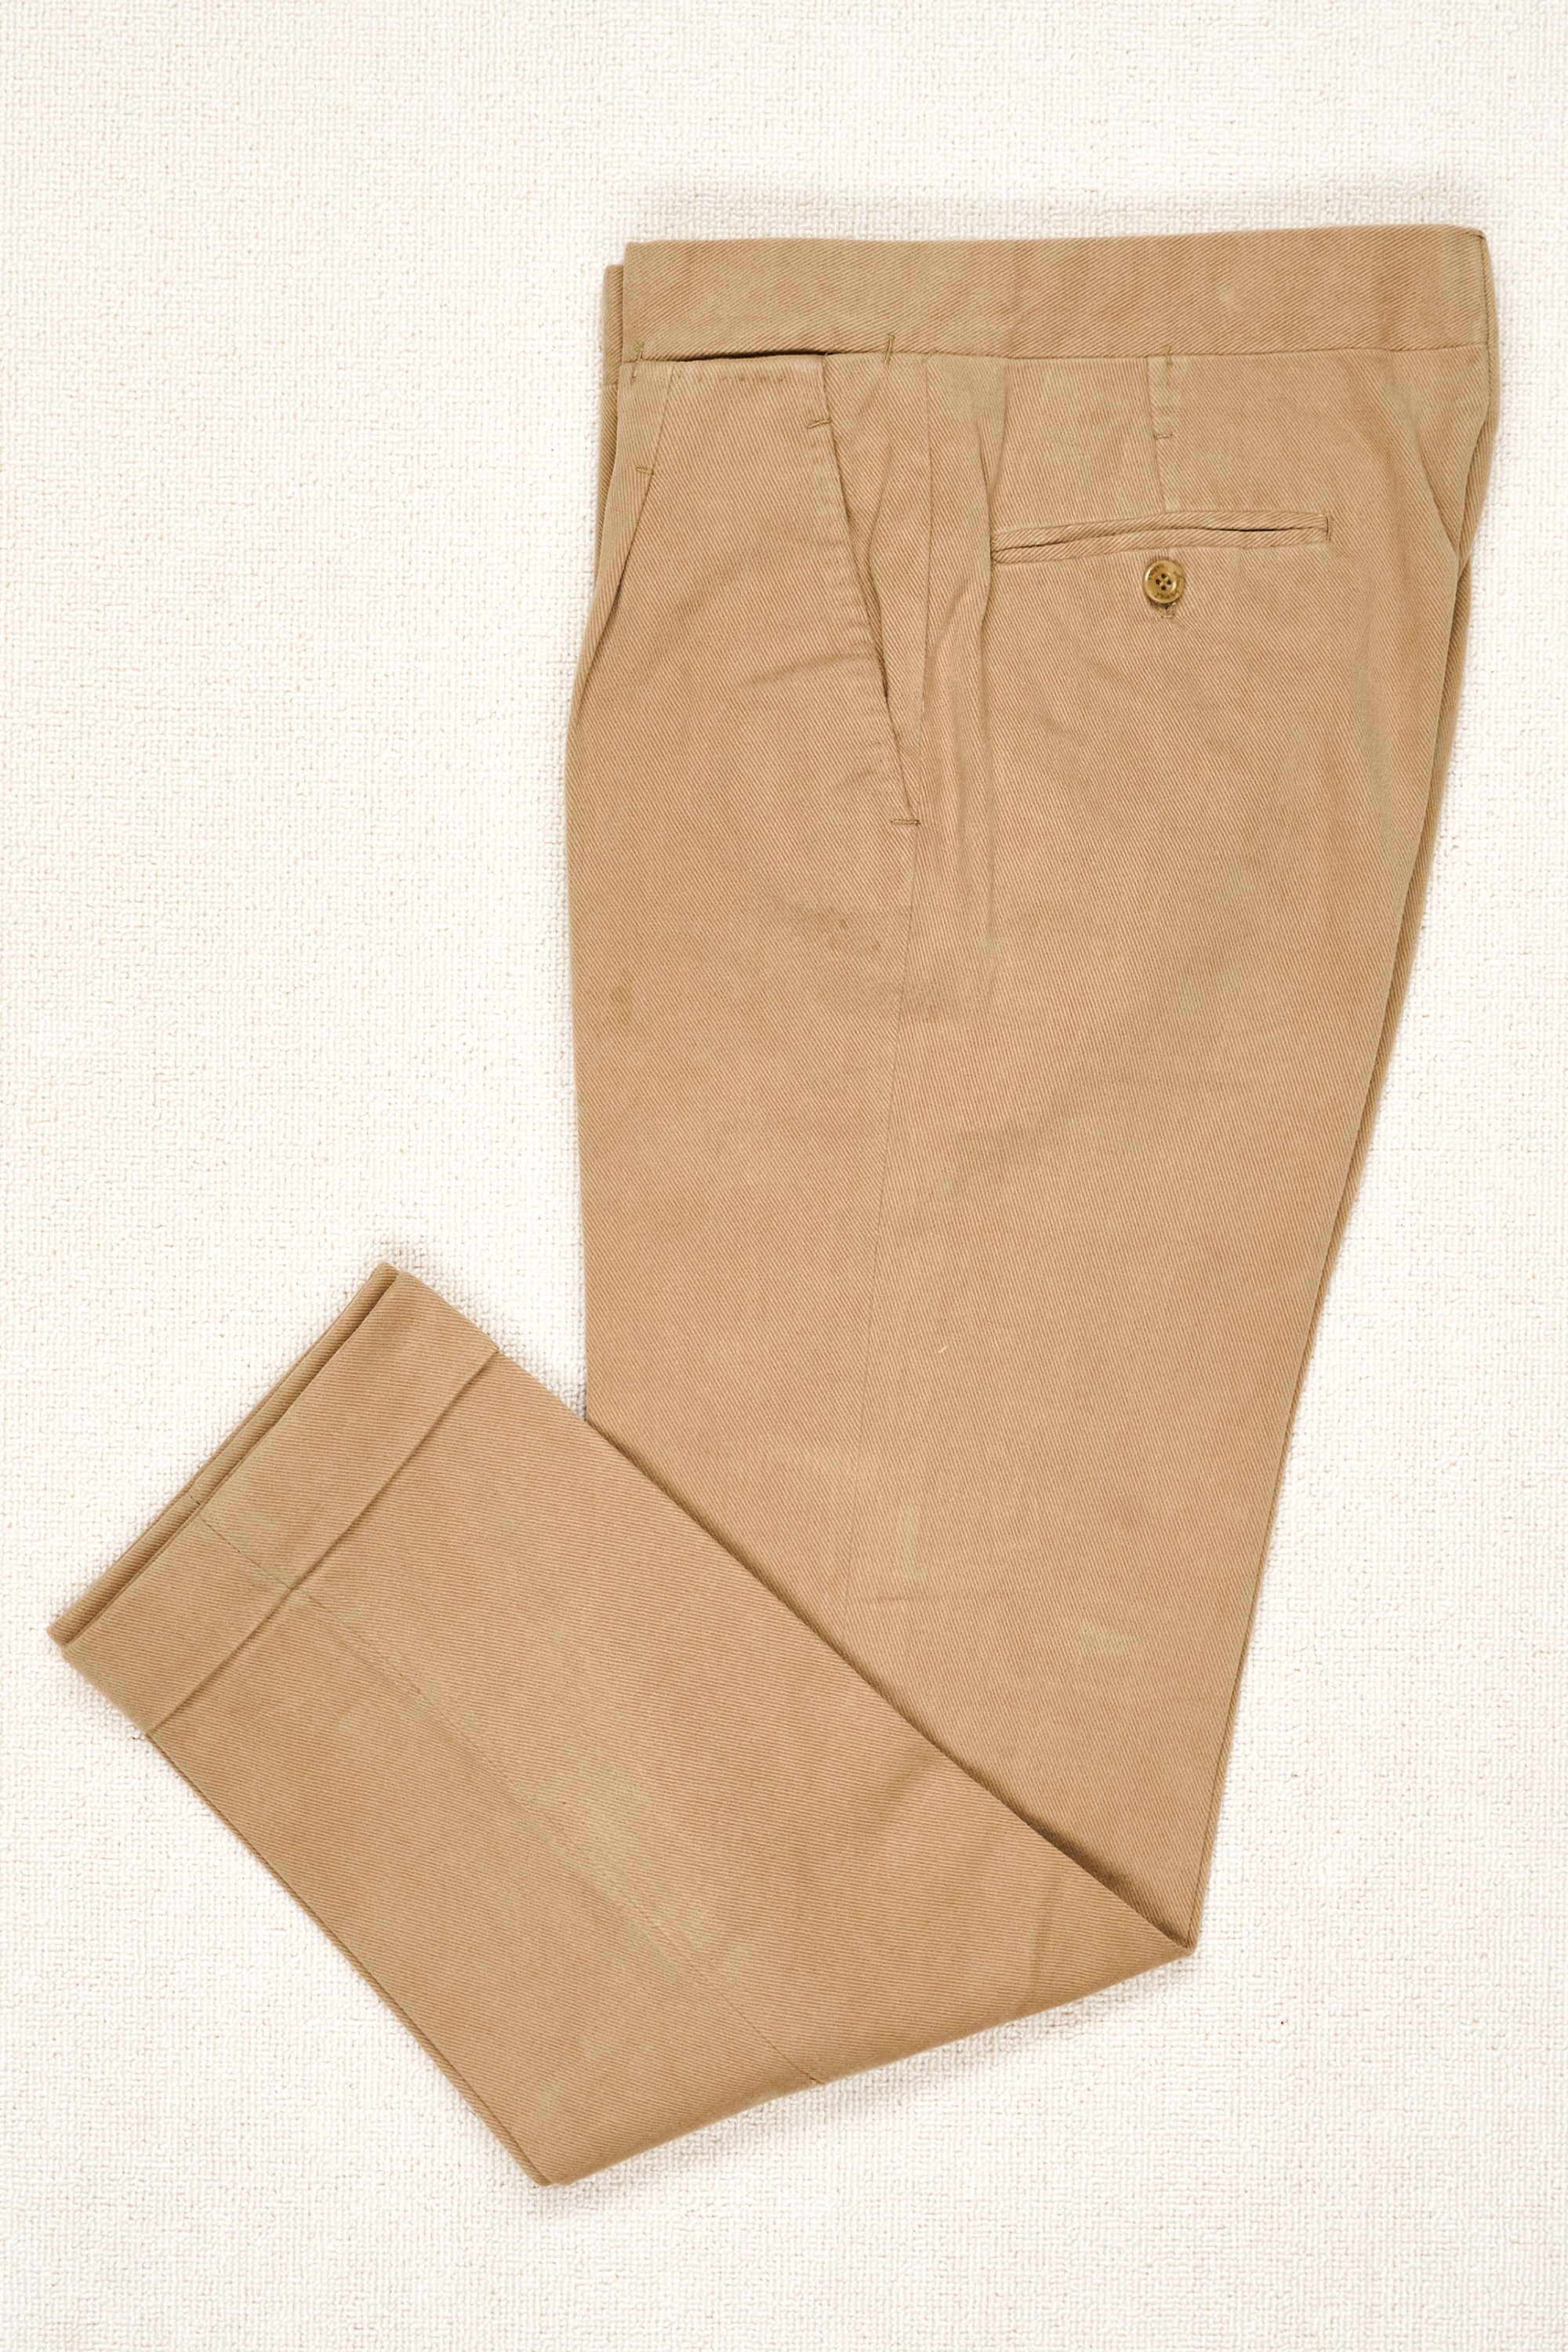 Ambrosi Napoli Beige Brushed Cotton Single-Pleat Trousers Bespoke